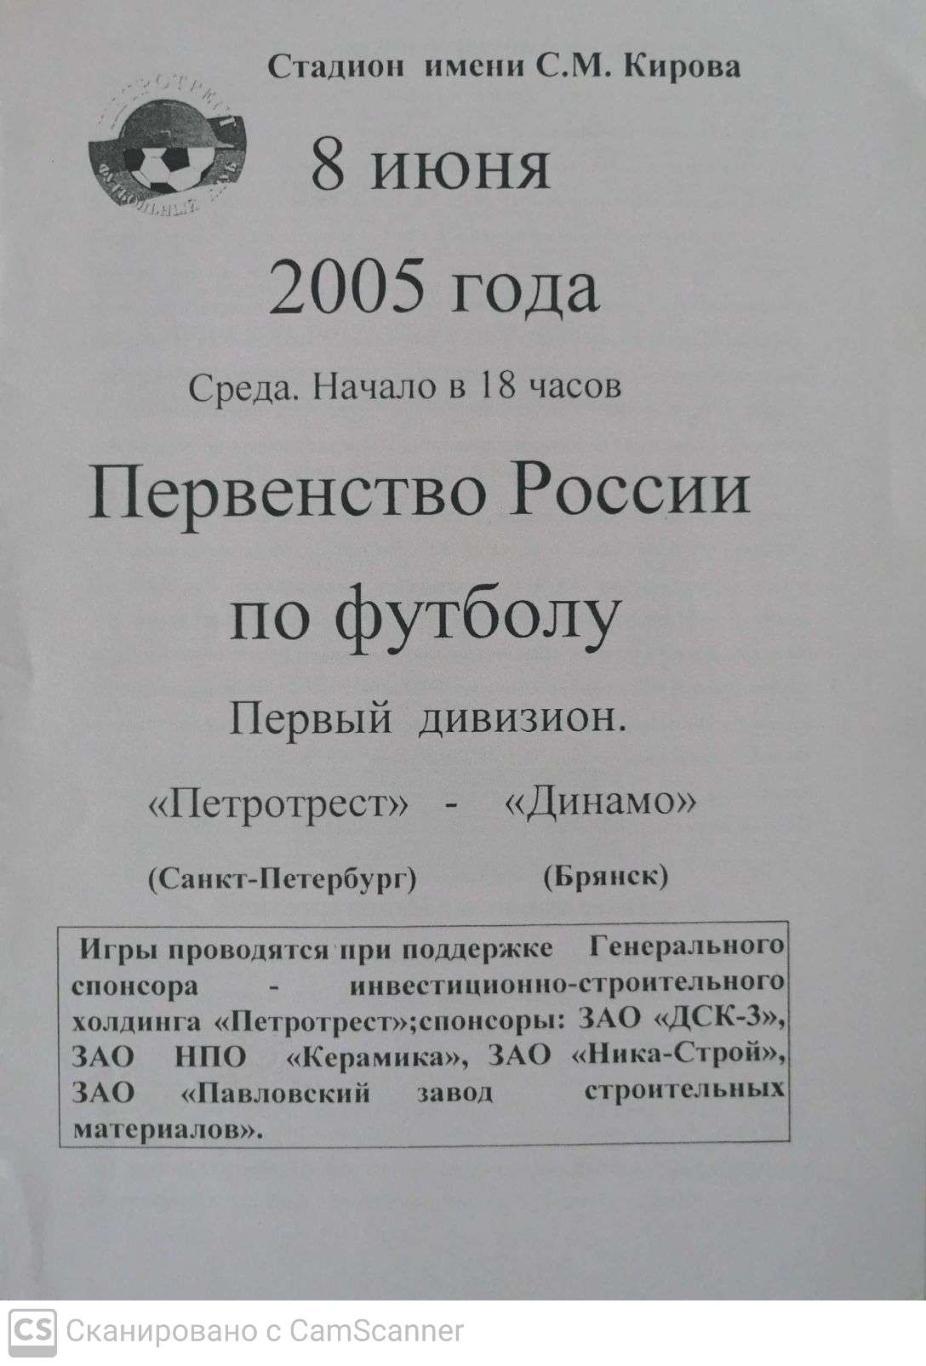 Первый дивизион. Петротрест СПб - Динамо Брянск 8.06.2005